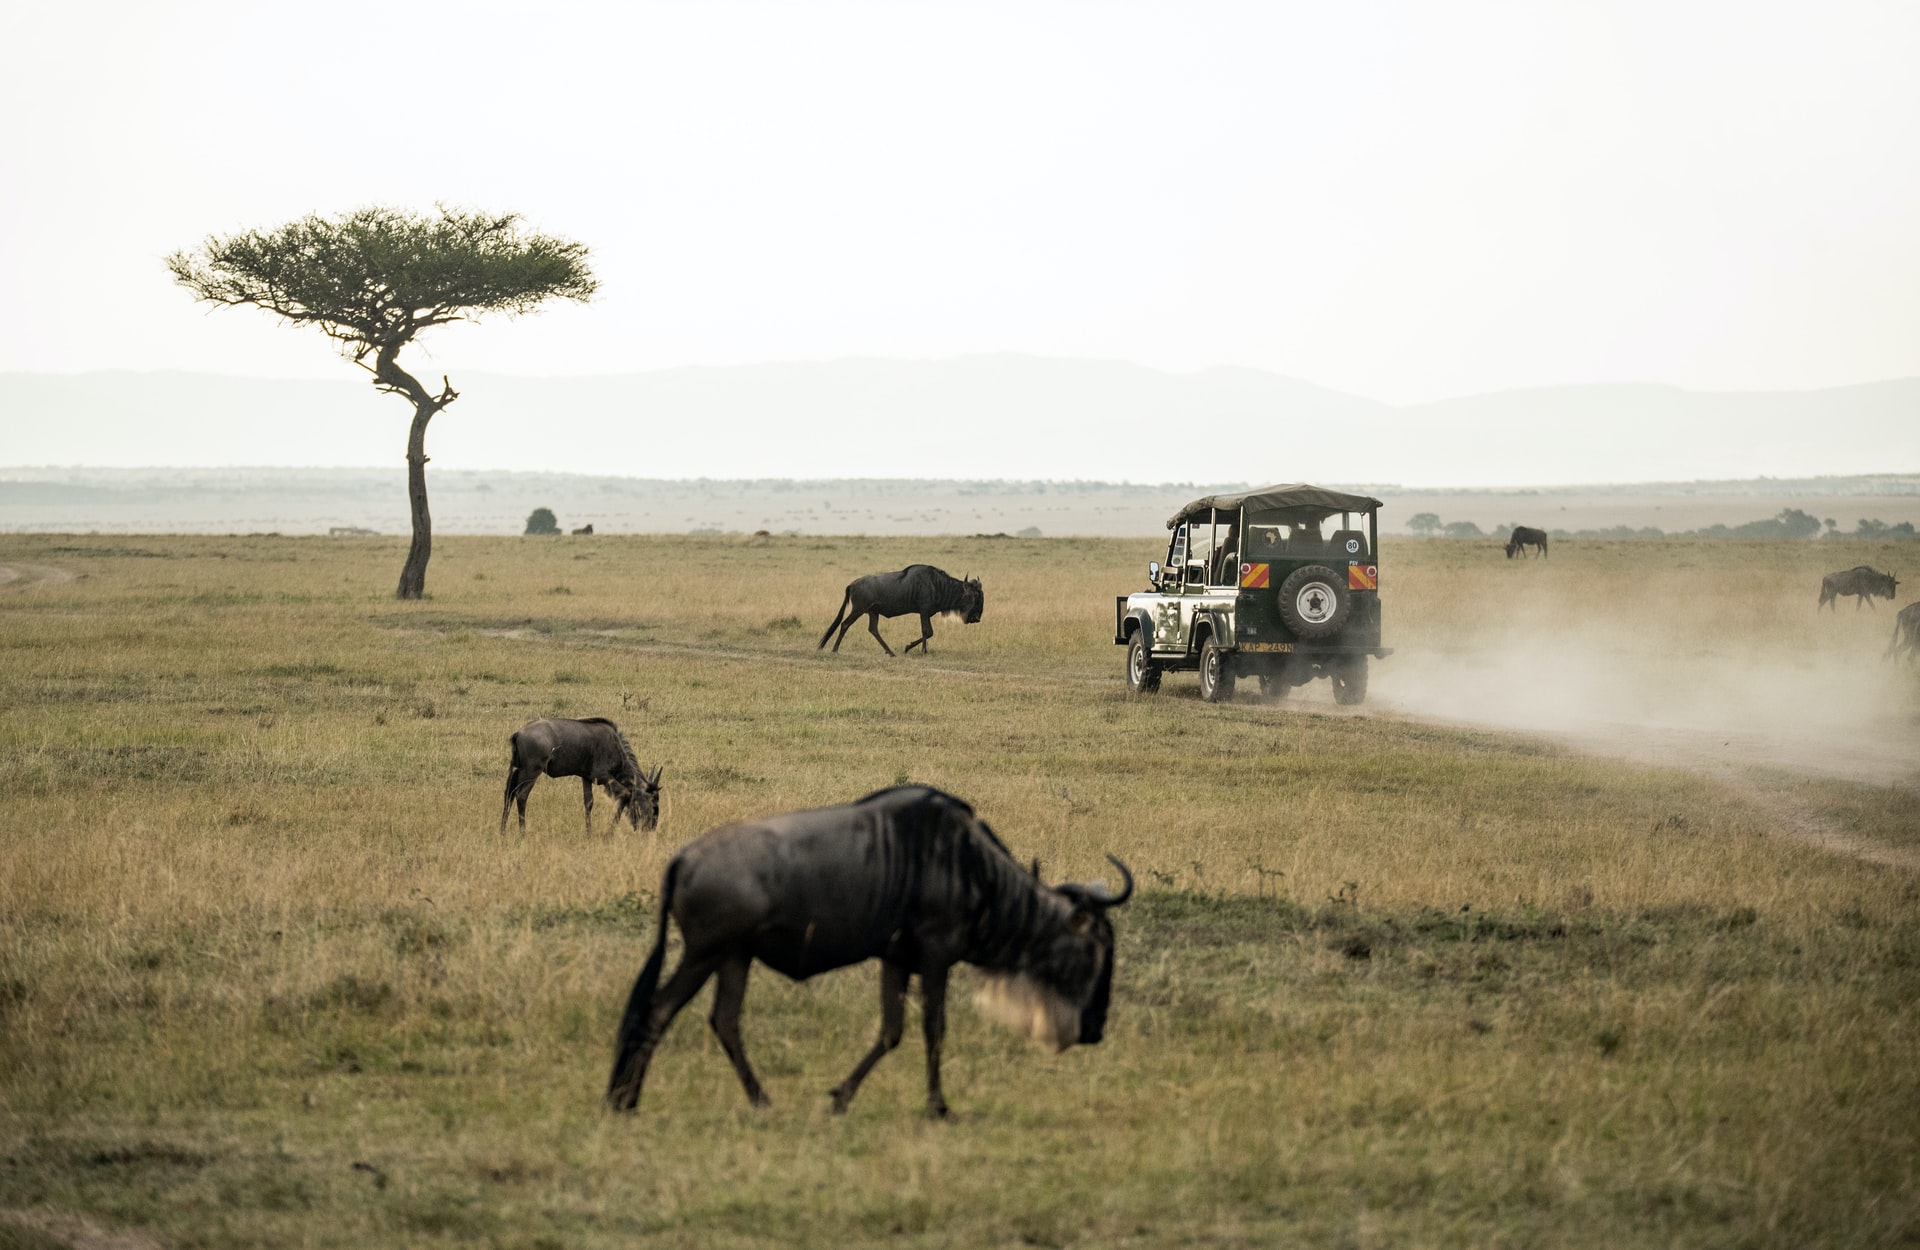 Best time to visit Masai Mara